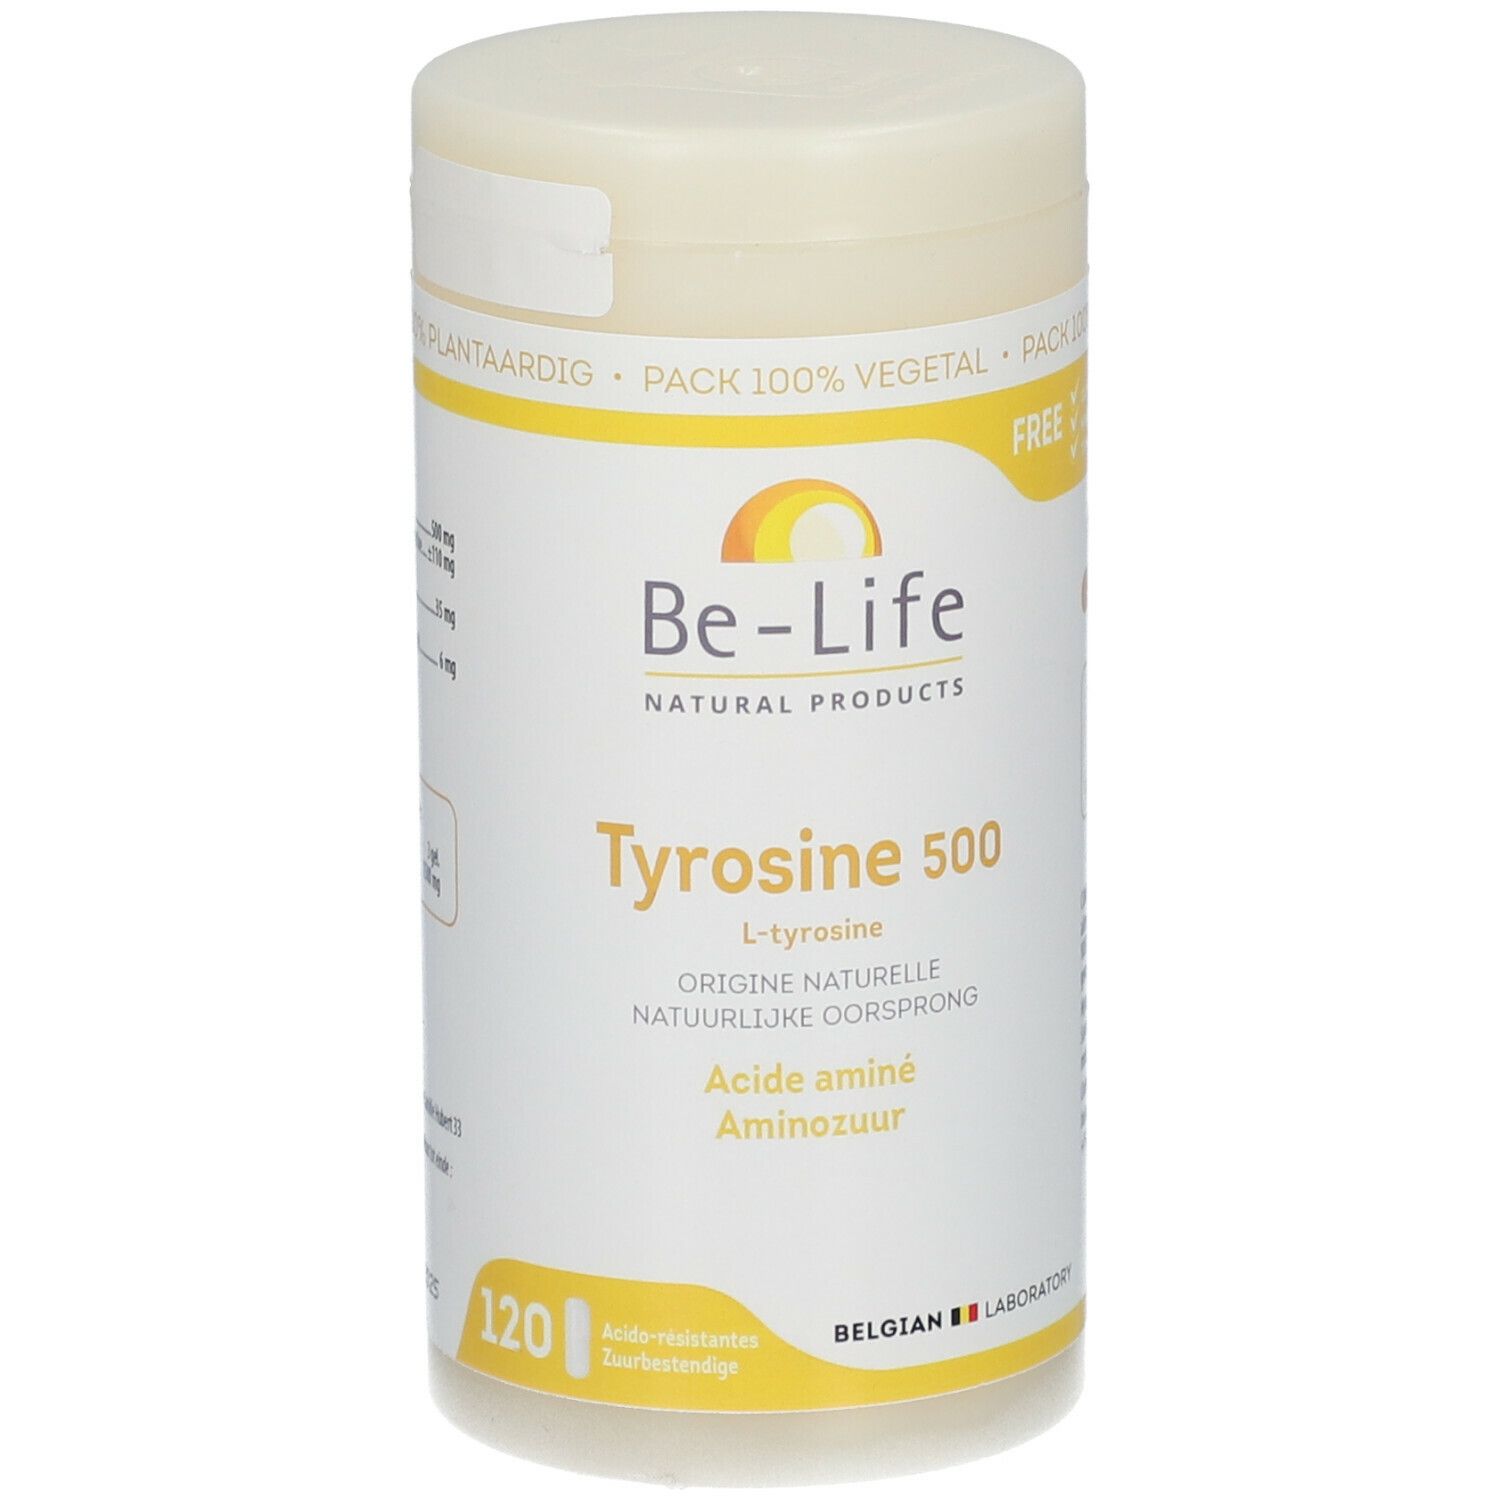 Be-Life Tyrosine 500